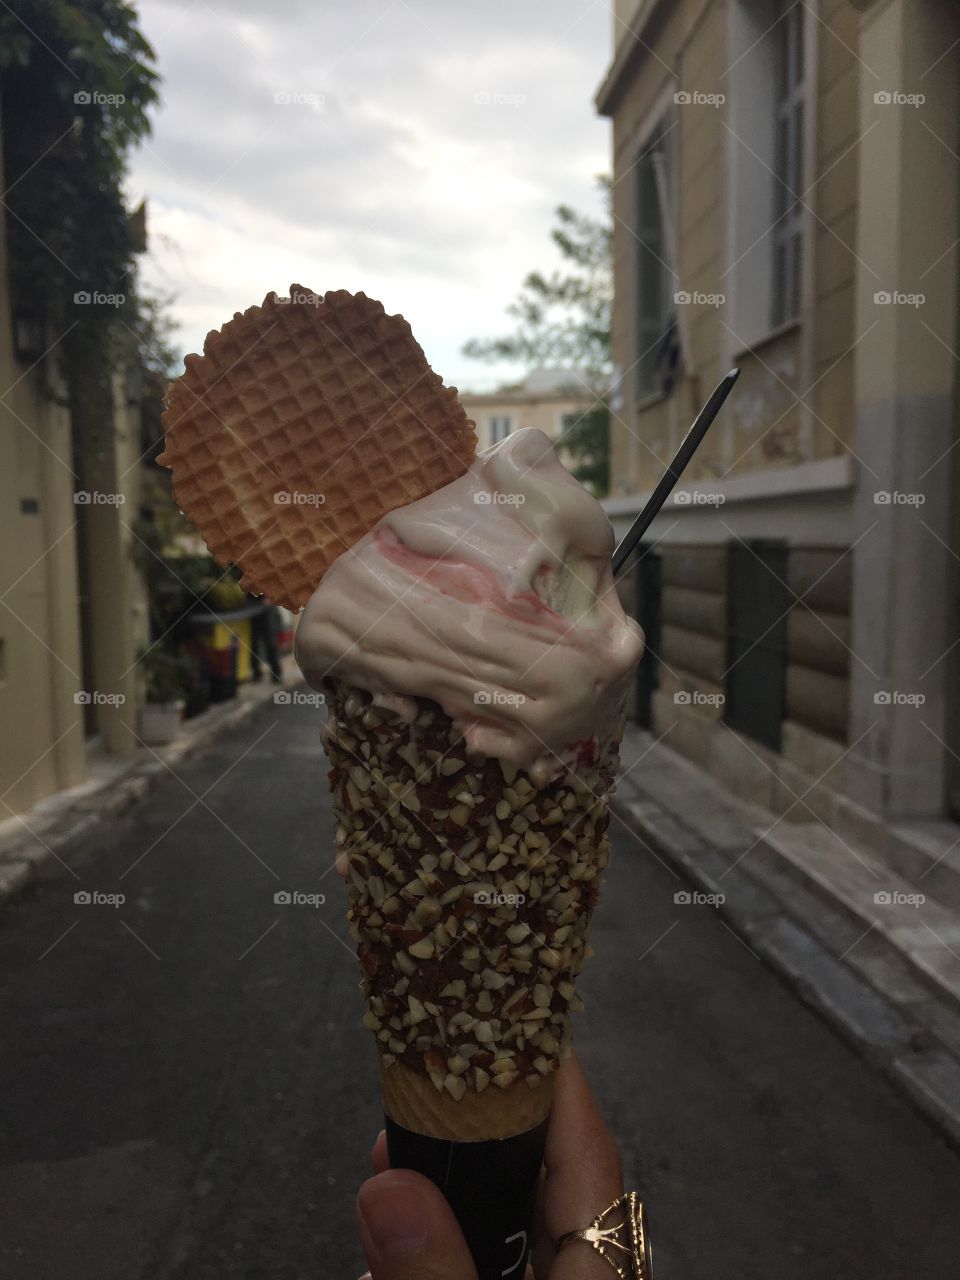 ice cream break in the street. 